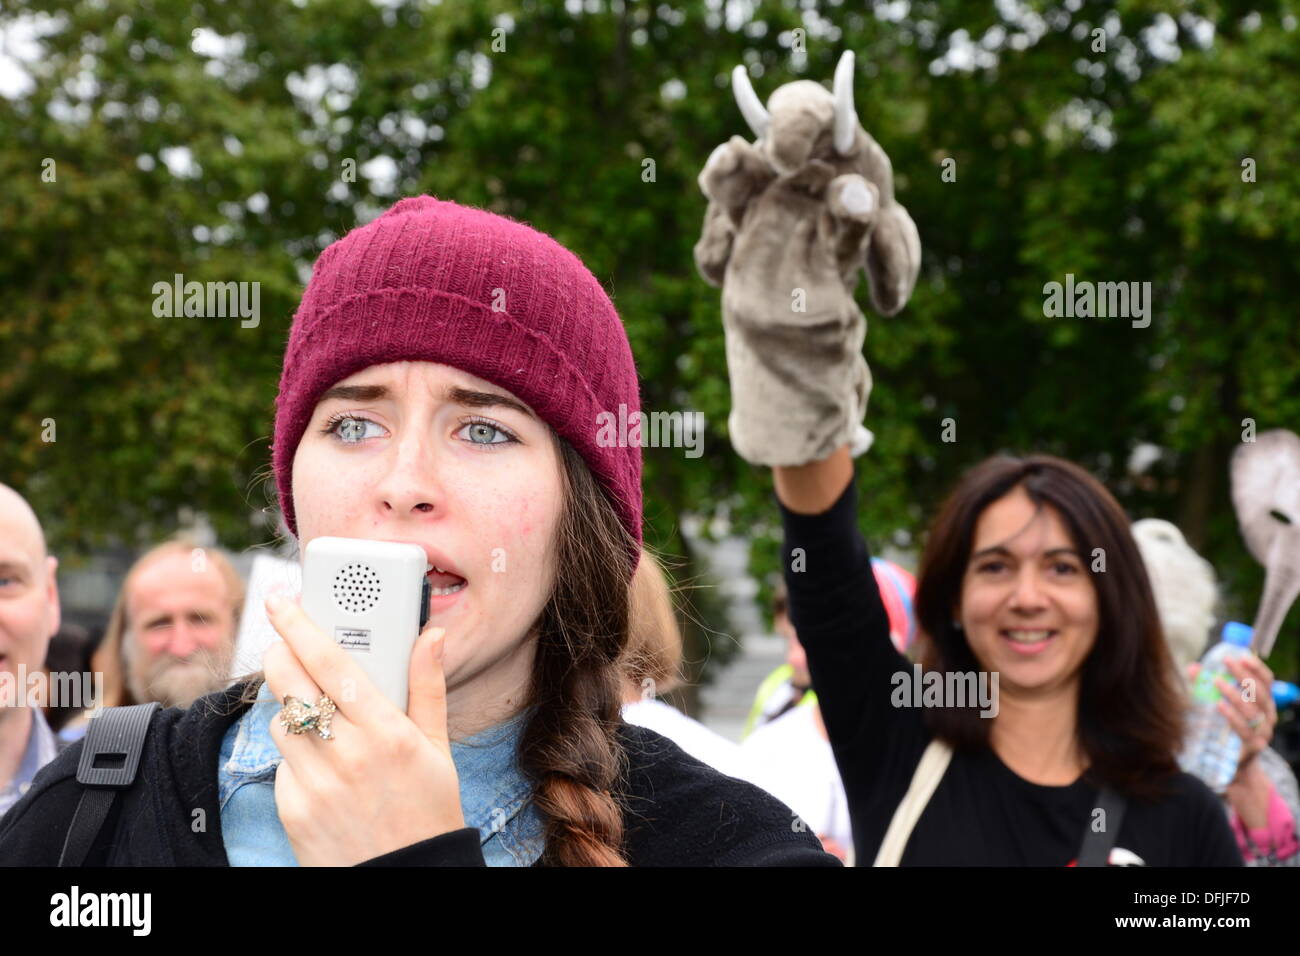 London UK, 4. Oktober 2013: Demonstranten außerhalb Parlament quadratische Protest gegen den Handel mit Elefanten-Rallye und fordern Ban Welt in London sein. Siehe Li / Alamy Live News Stockfoto